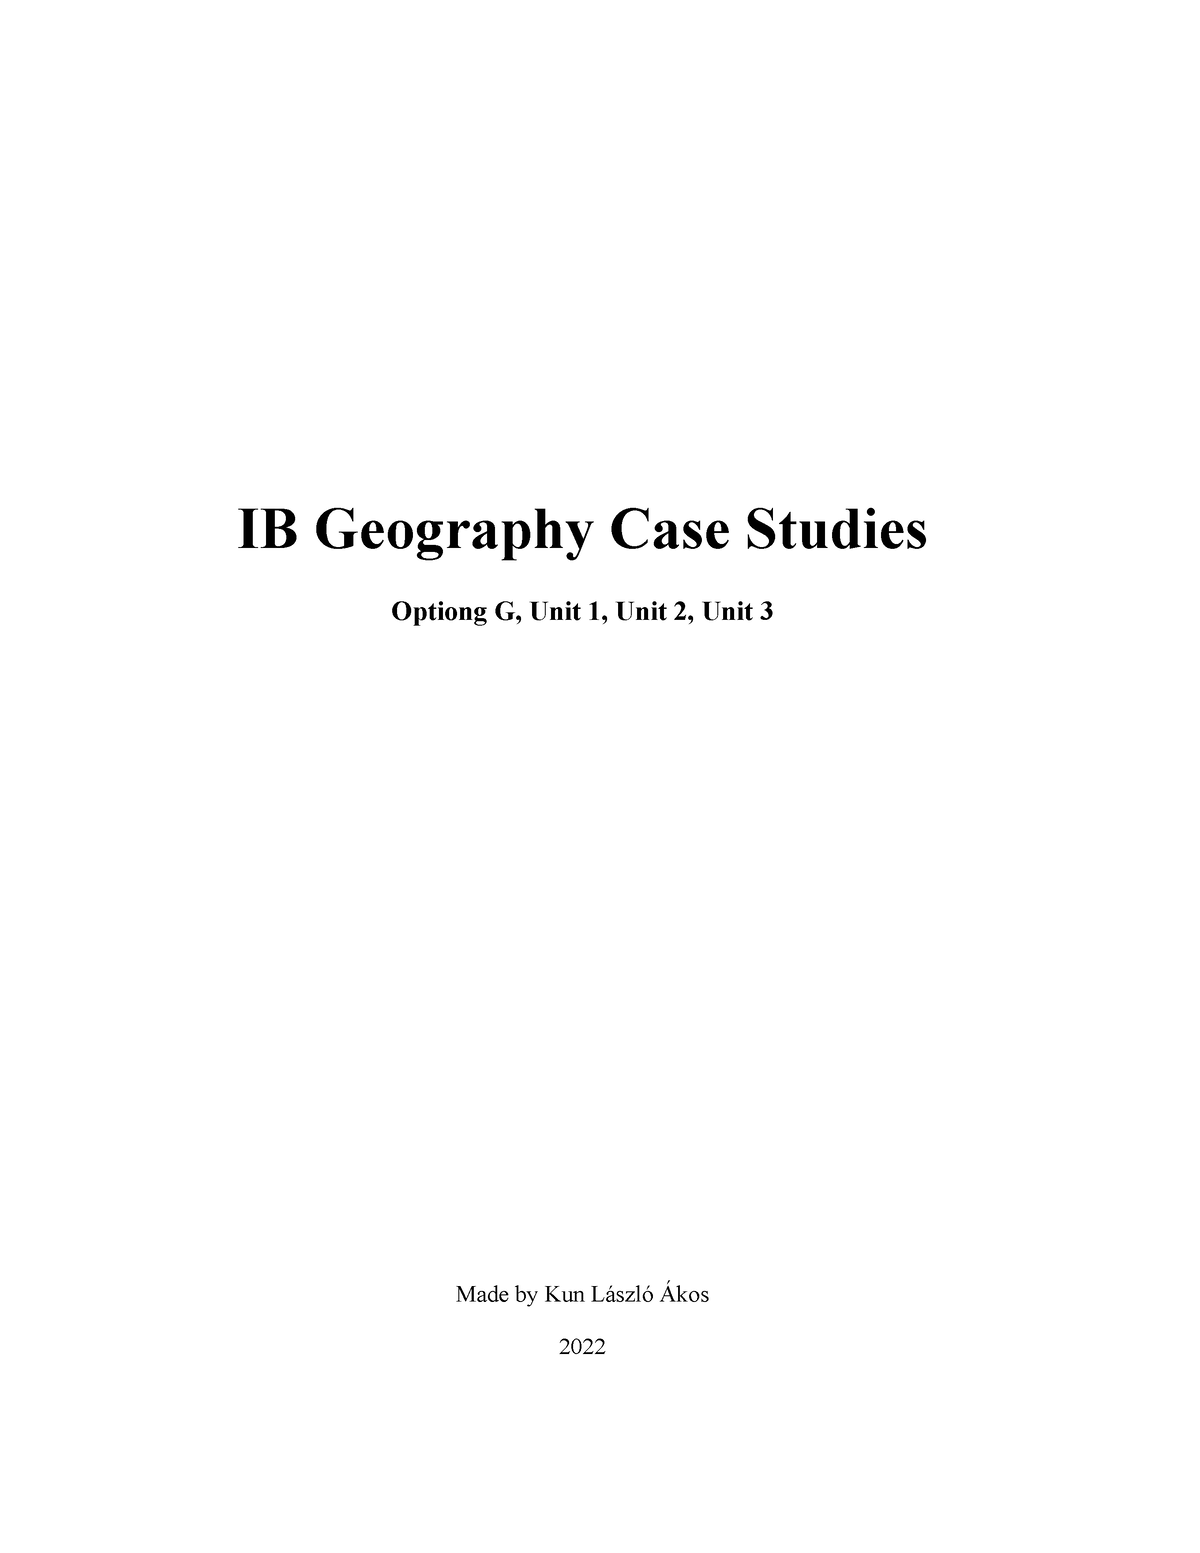 tourism ib geography case study